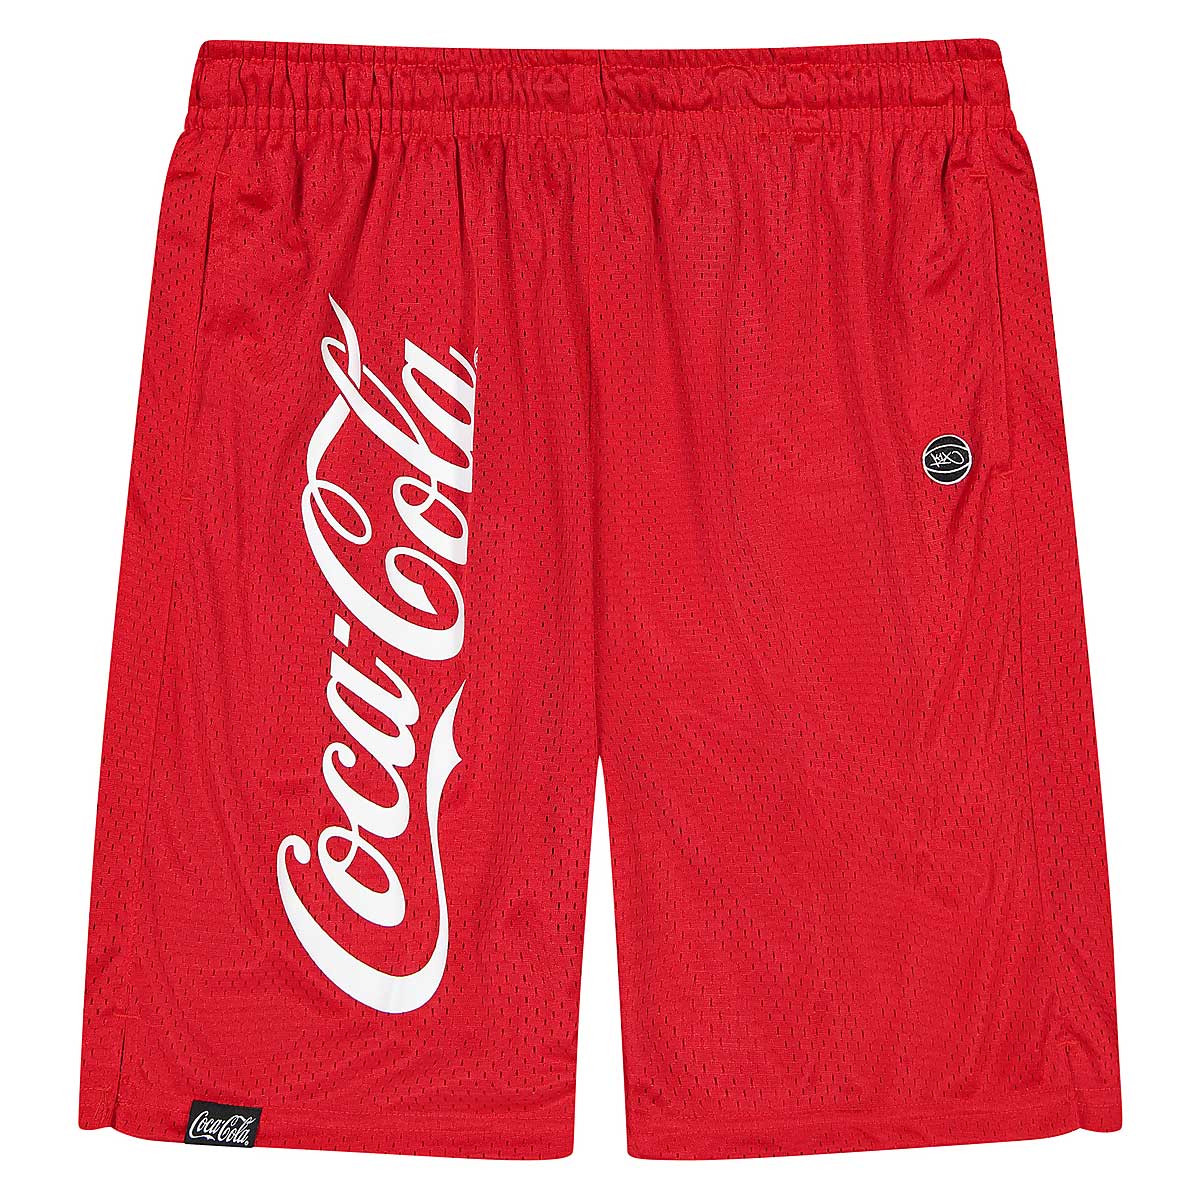 K1X Coca-Cola Oldschool Shorts, True Red